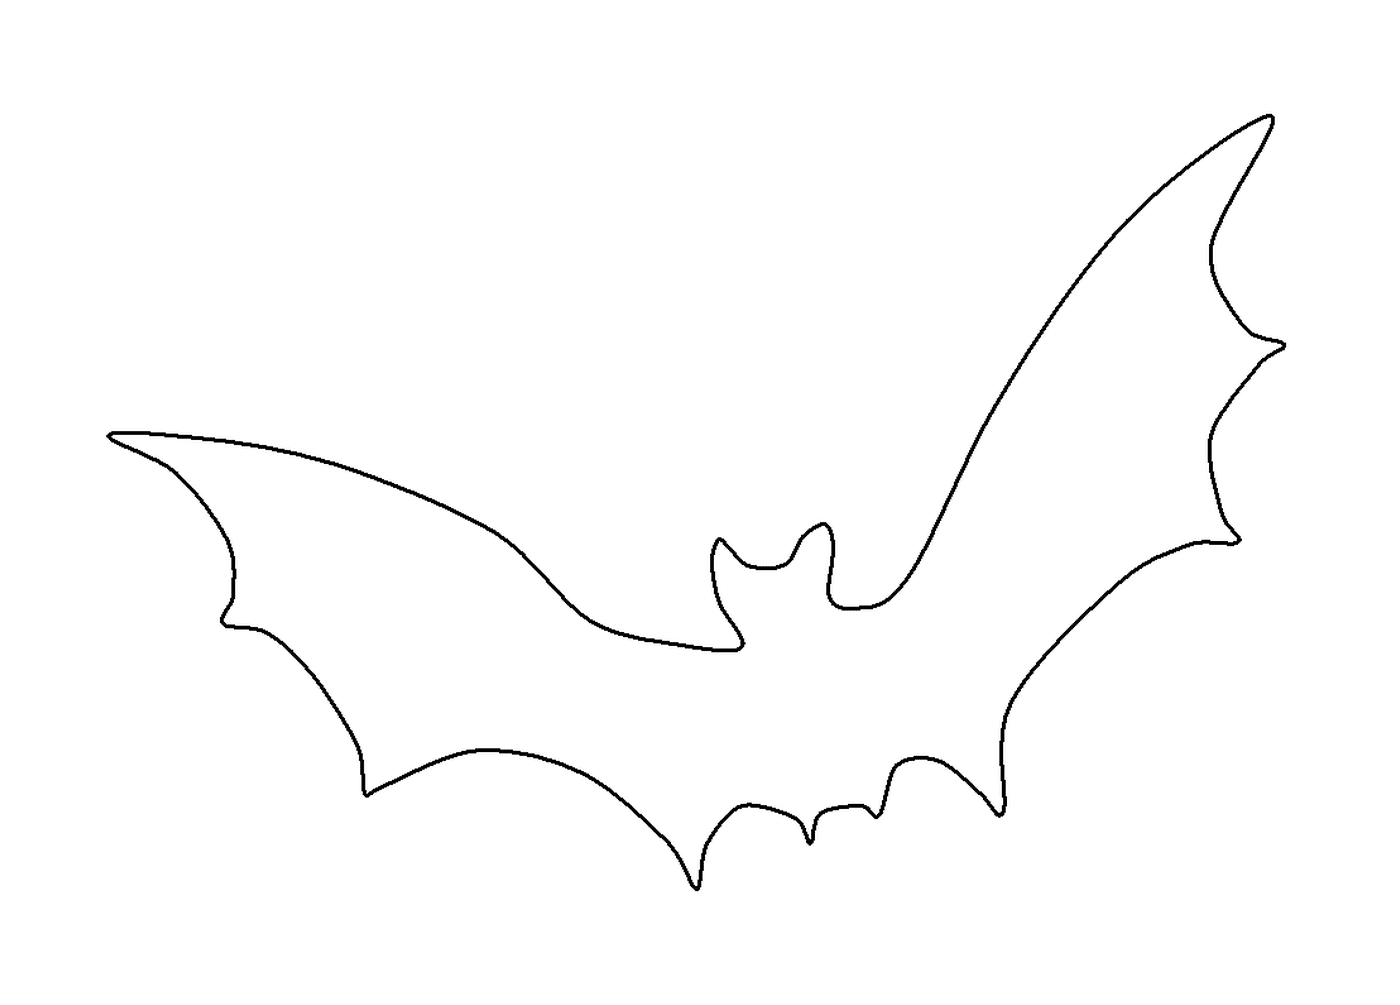  contour of a flying bat 